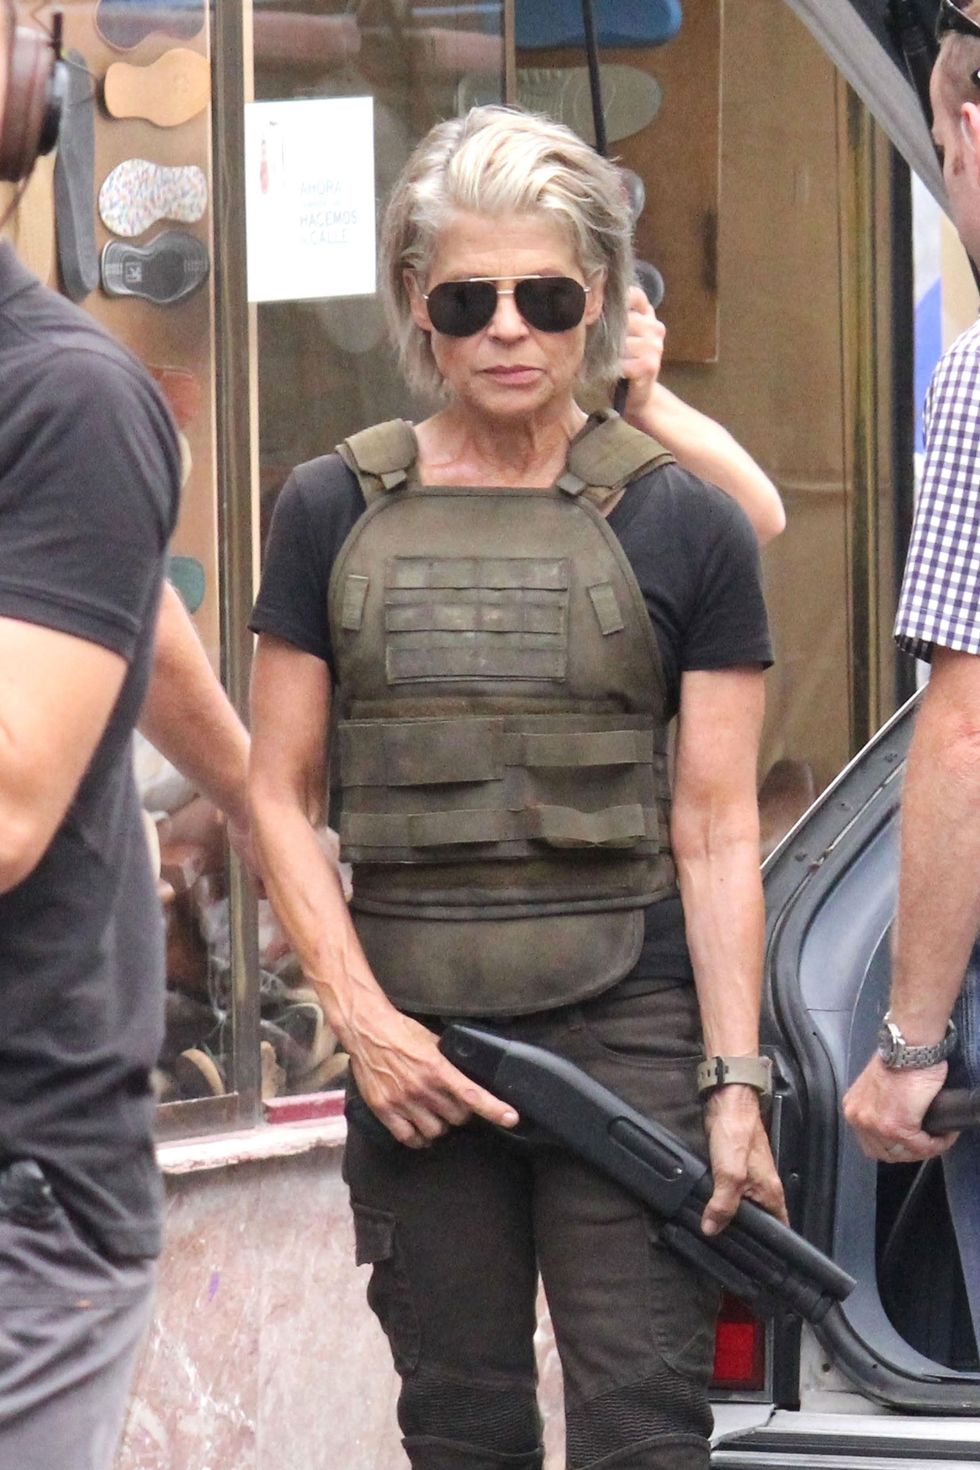 NO REUSE/EMBARGOED UNTIL 18:15PM GMT 21st June 2018, Linda Hamilton returns as Sarah Connor in Terminator reboot